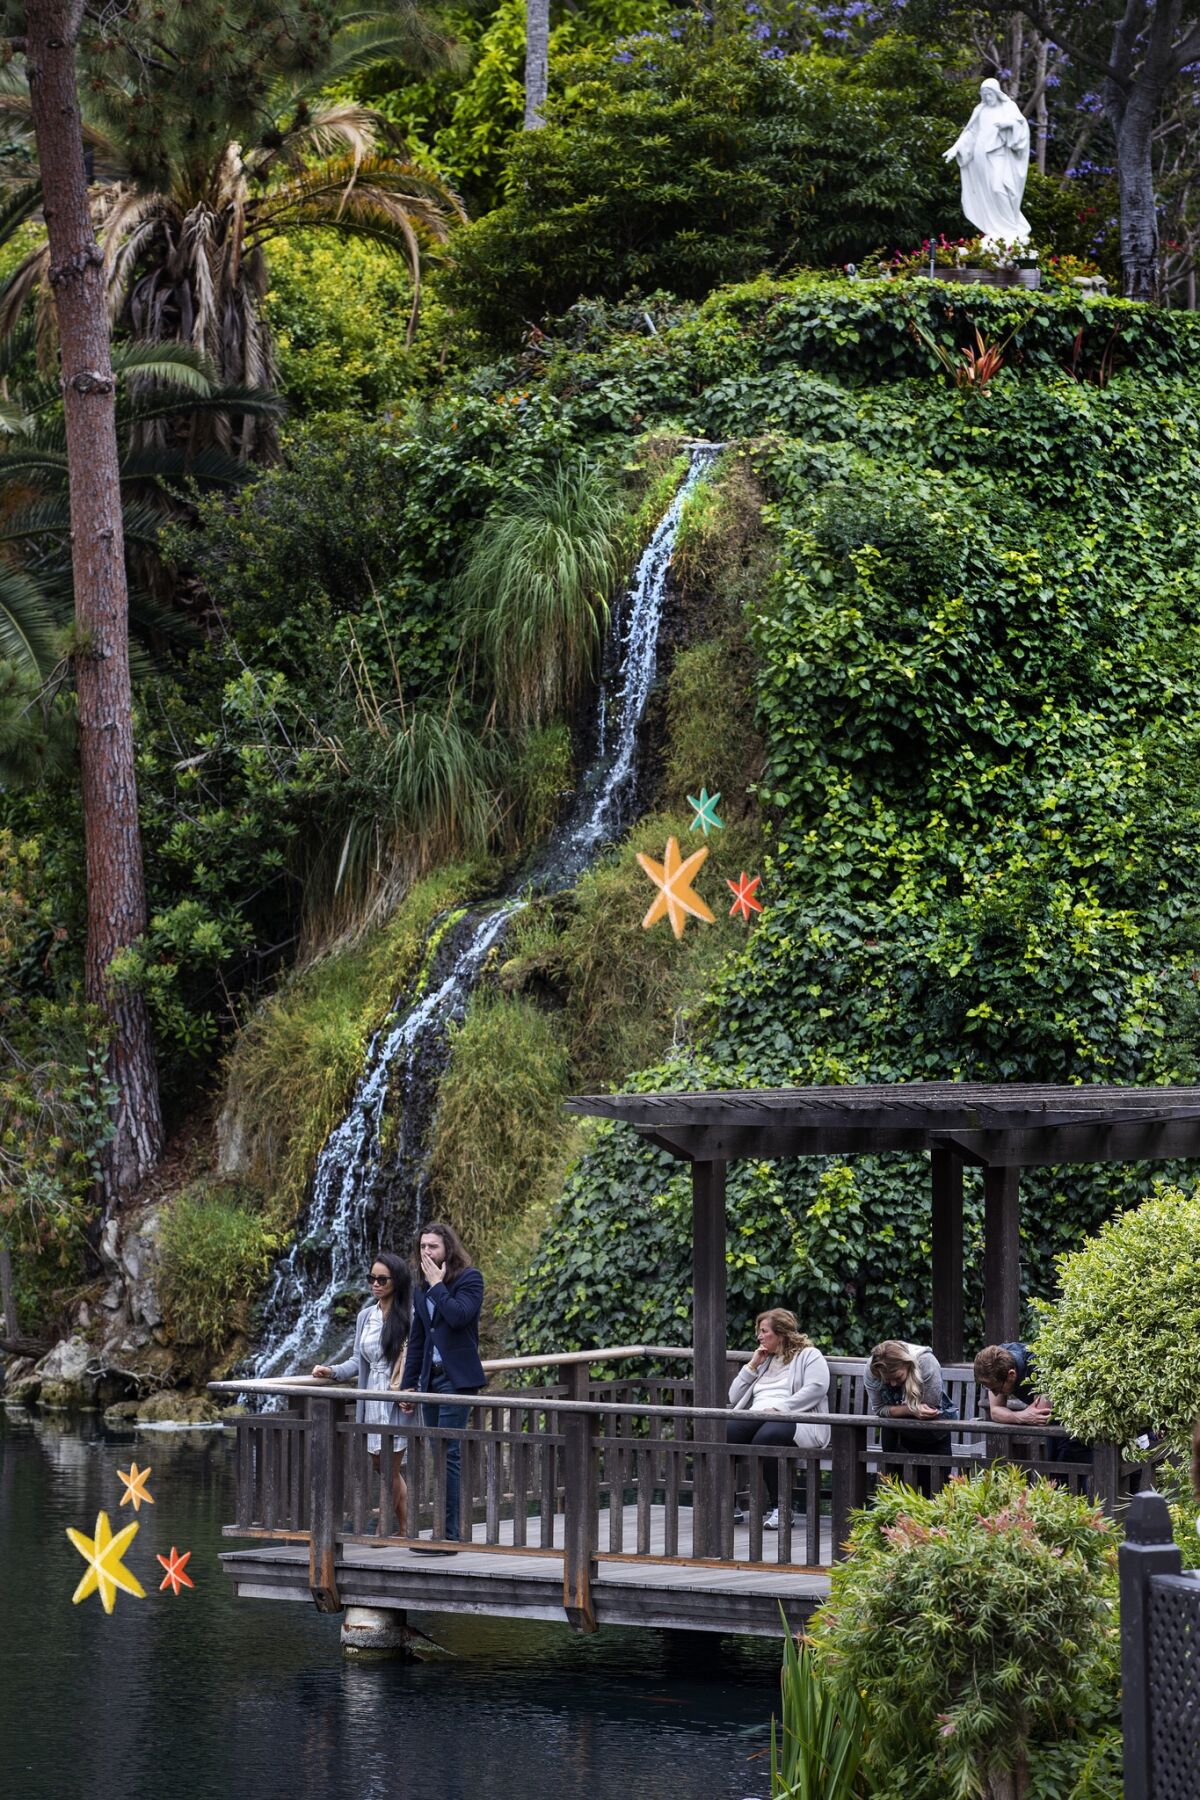 Visitors enjoy the Meditation Gardens at the Self-Realization Fellowship Lake Shrine in Pacific Palisades. 